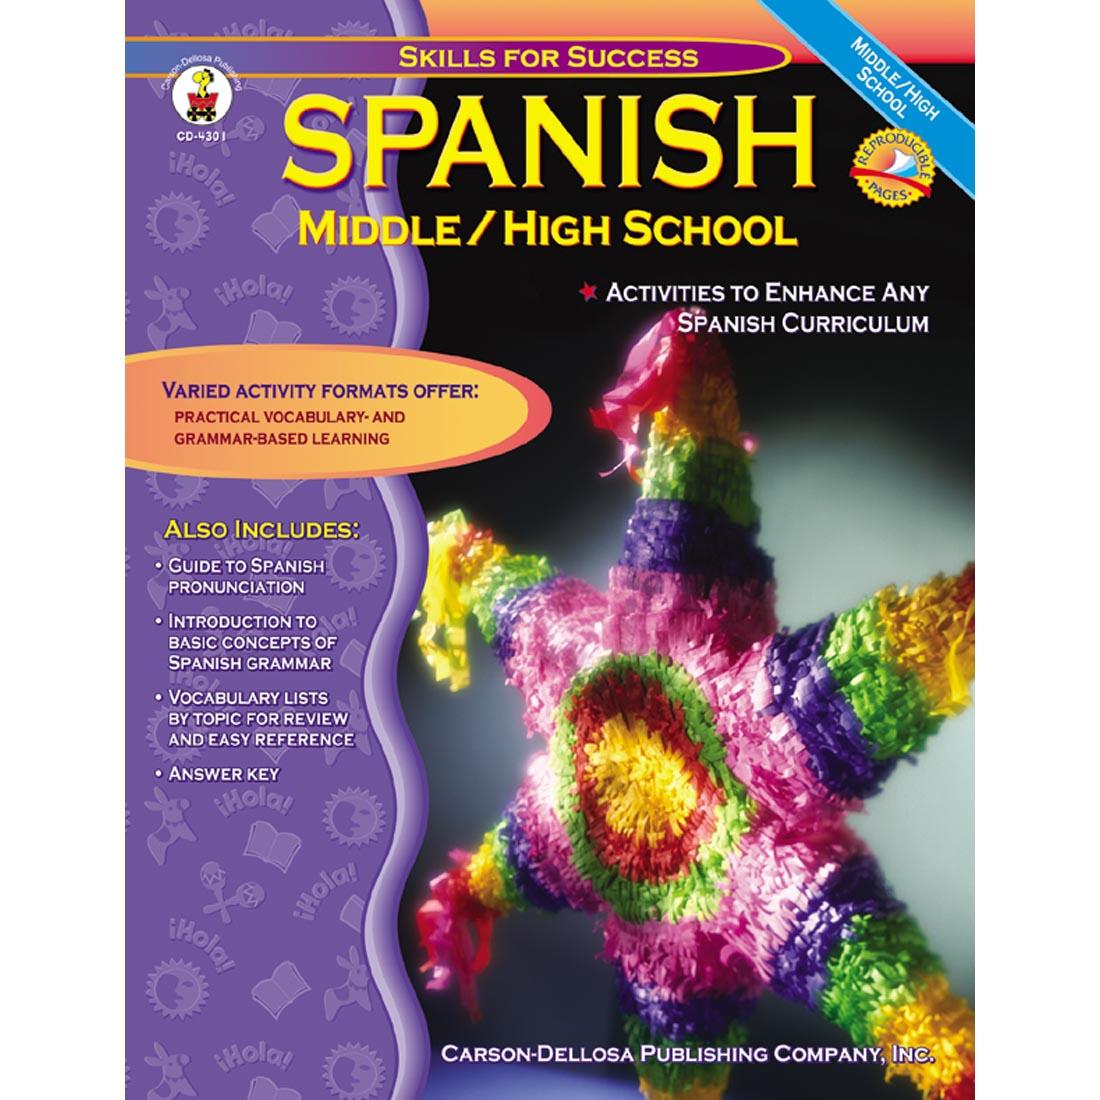 Spanish Middle/High School Skills For Success Book by Carson Dellosa